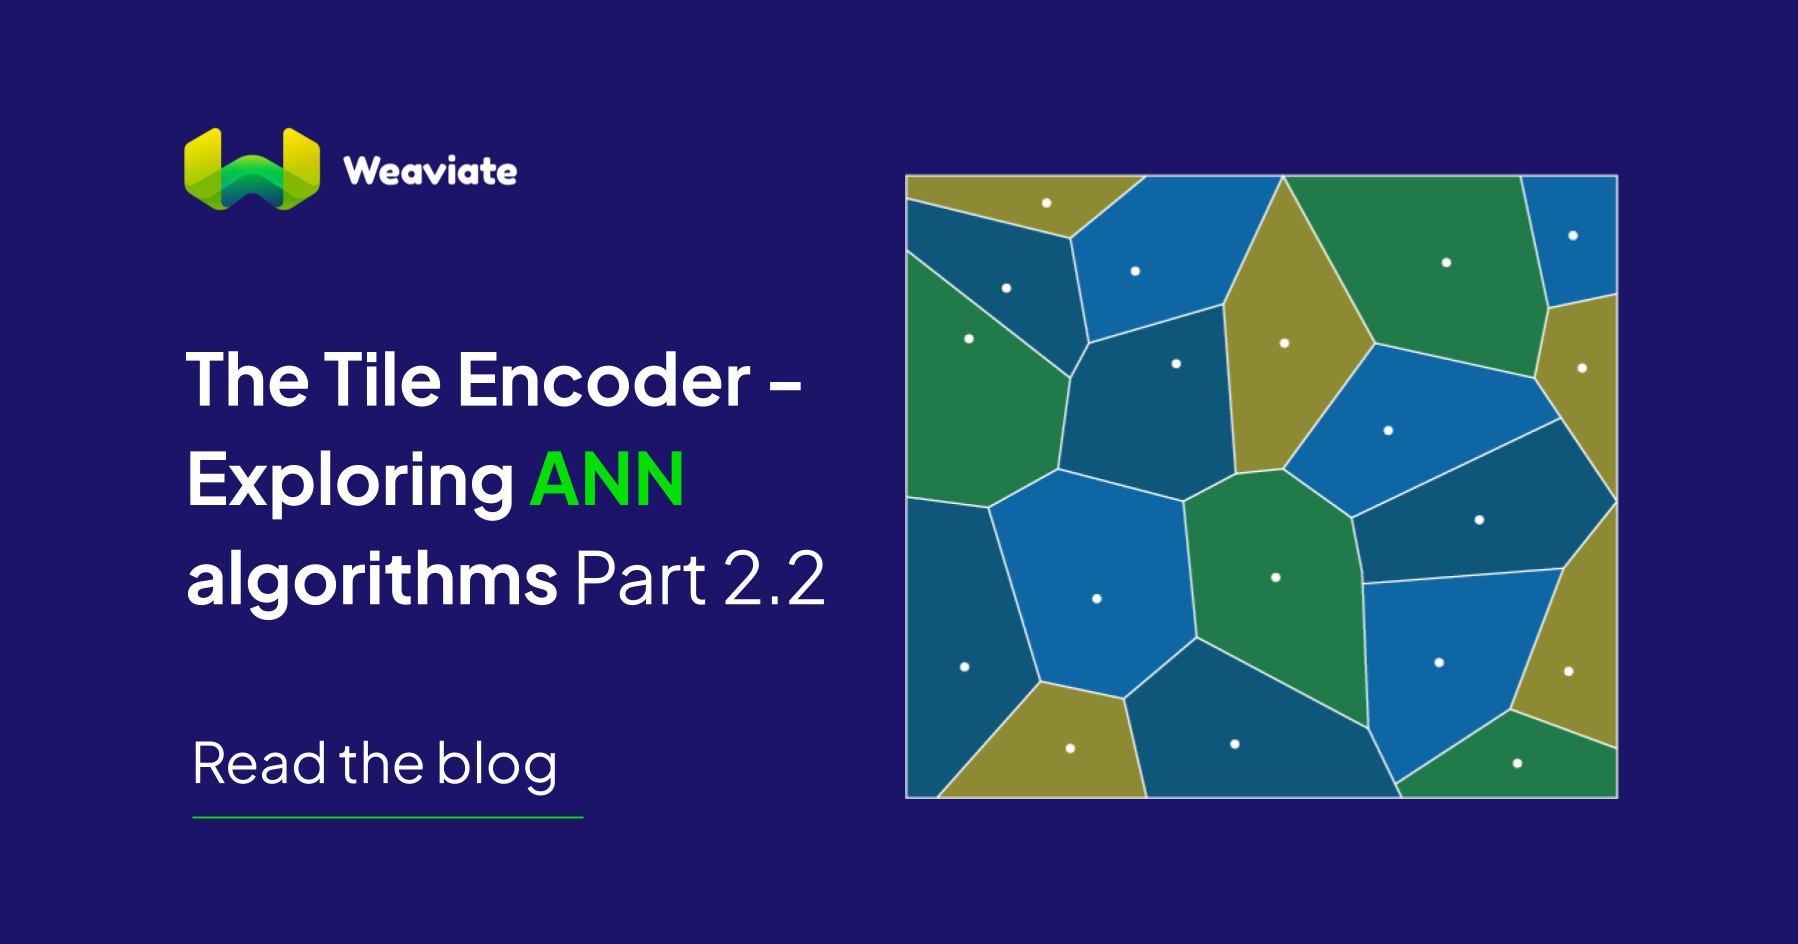 The Tiles Encoder - Exploring ANN algorithms Part 2.2